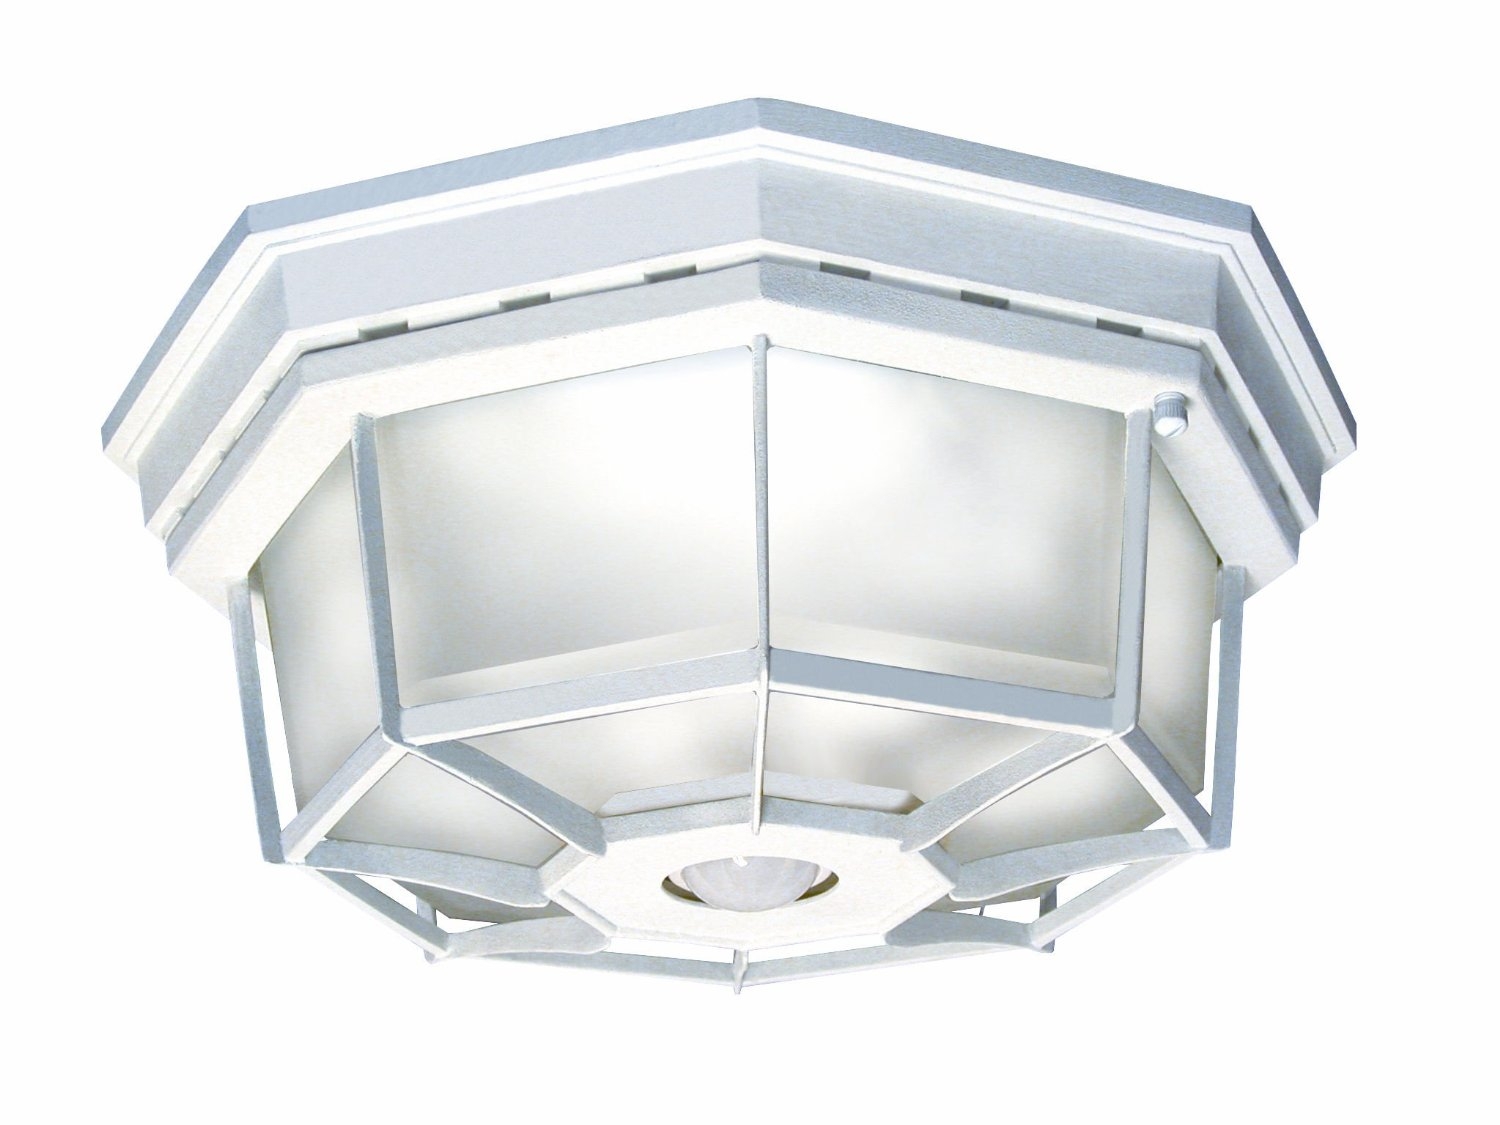 Motion Sensor Ceiling Light Fixture